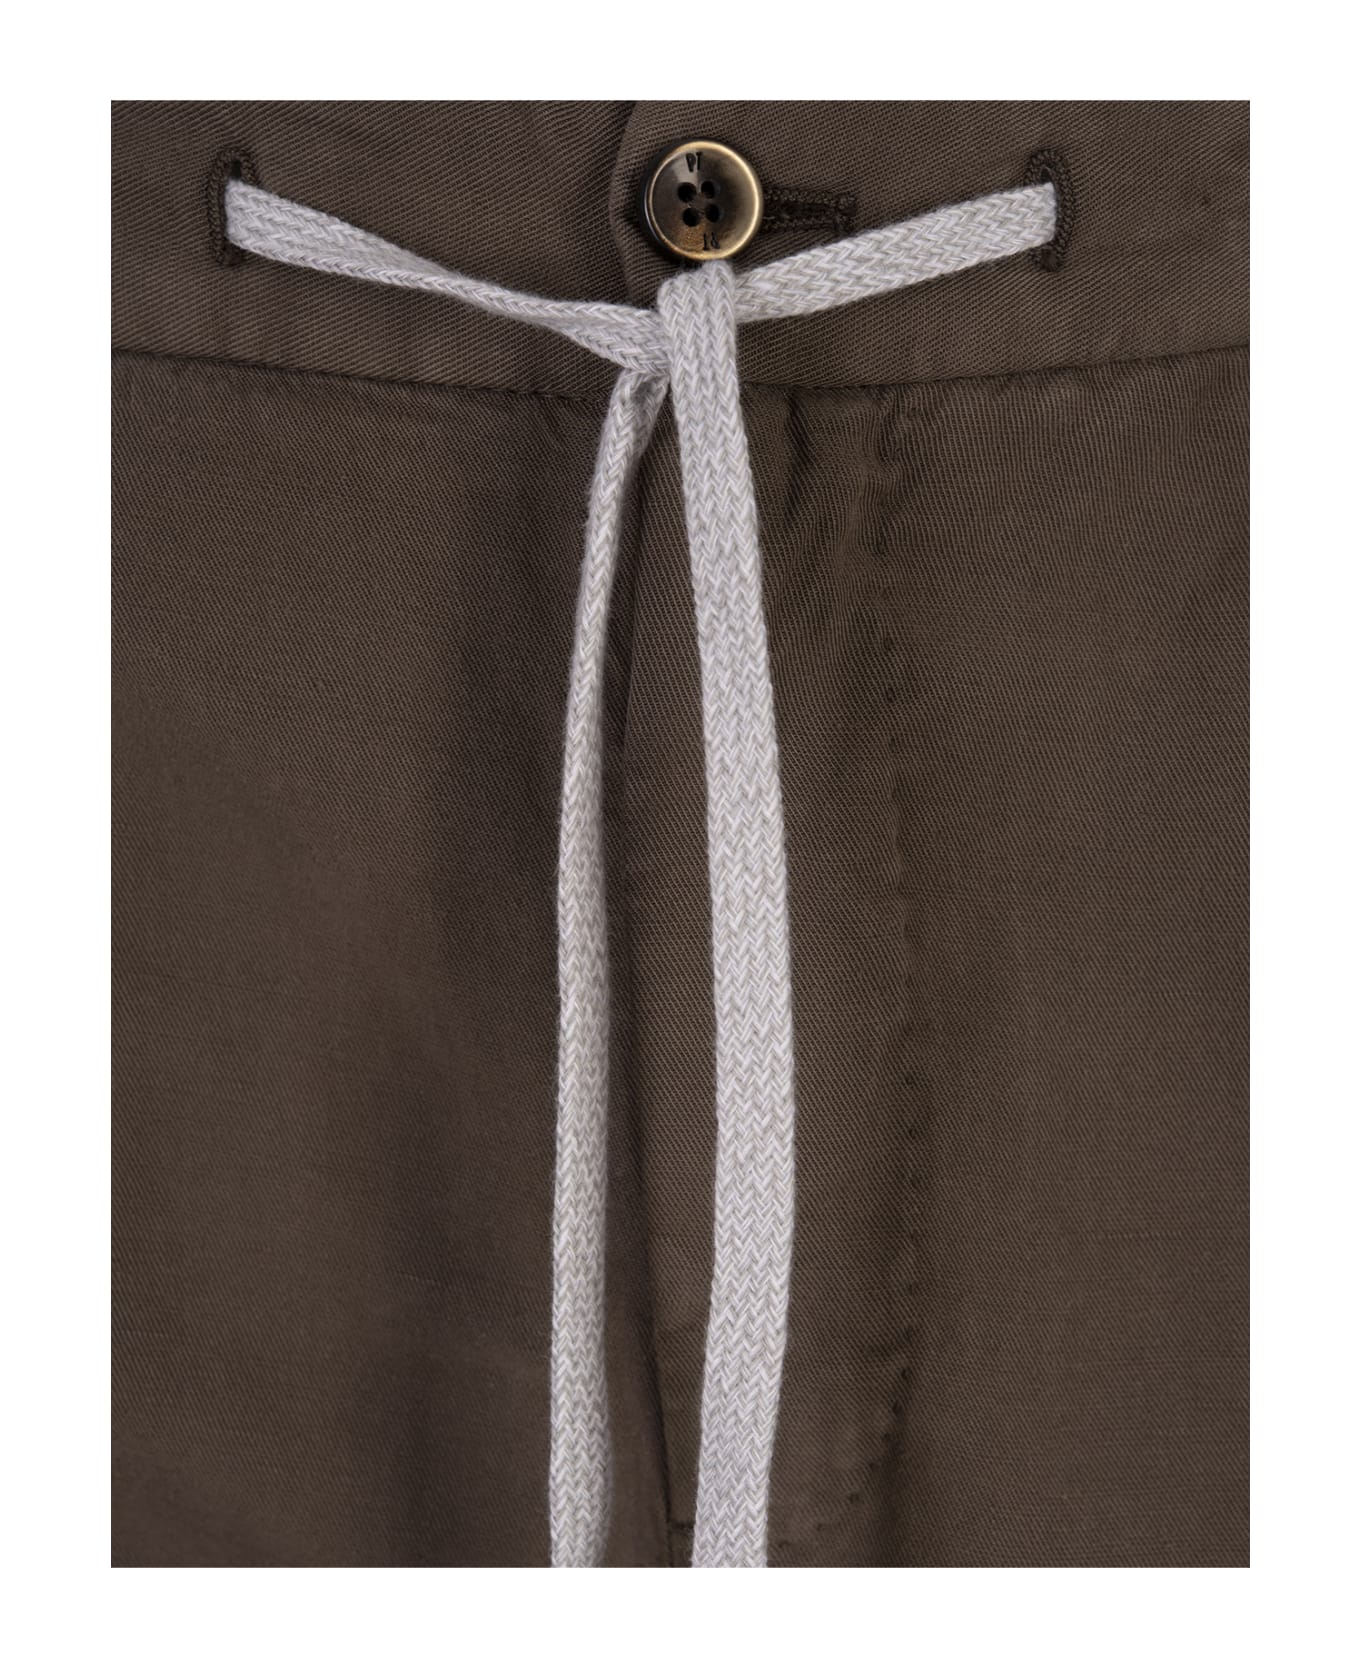 PT Torino Brown Linen Blend Soft Fit Trousers - Brown